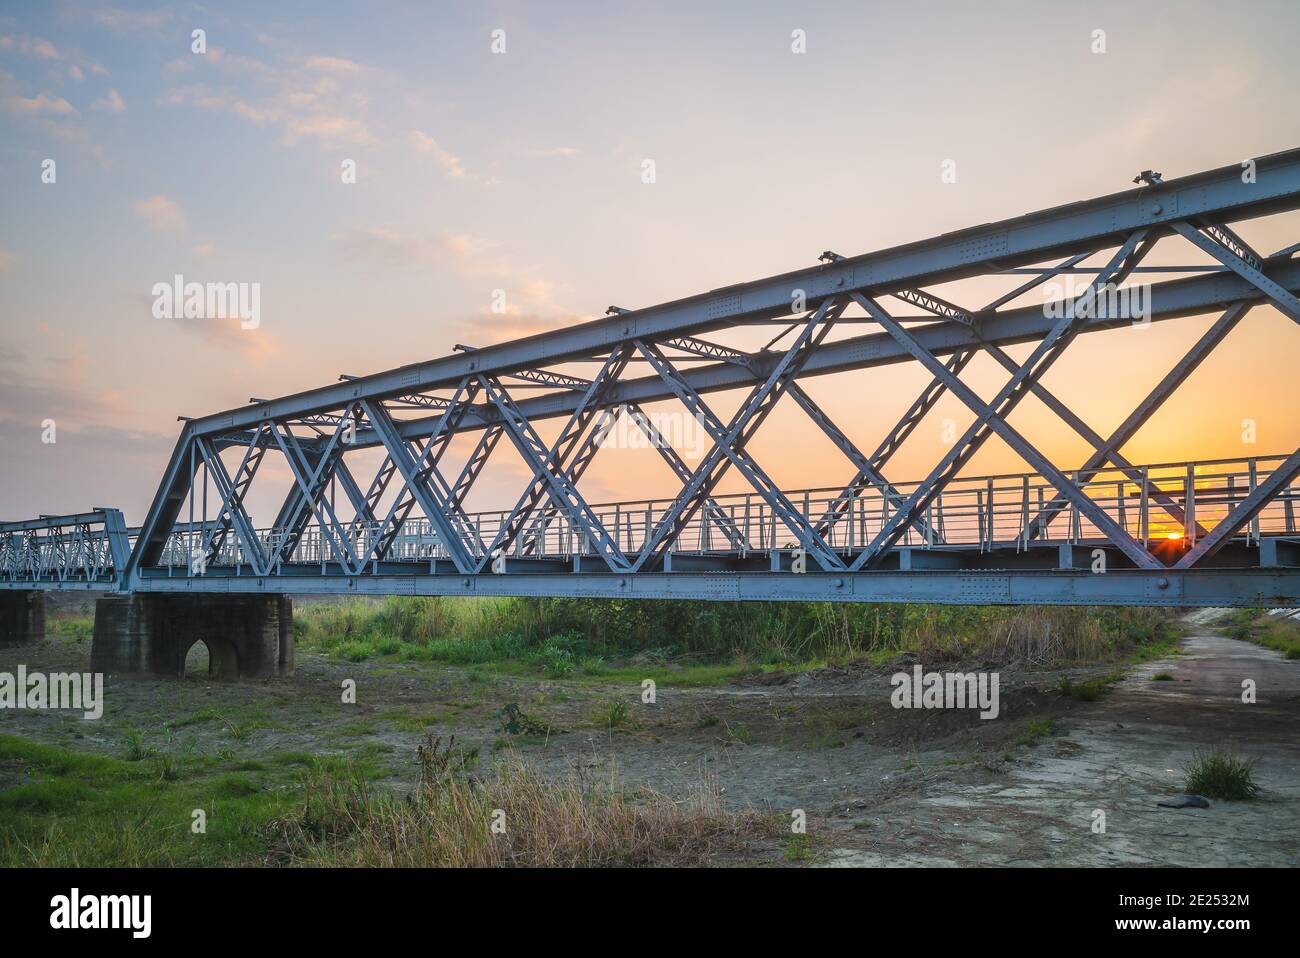 Heritage Steel Bridge at Huwei township, Yunlin county, Taiwan Stock Photo